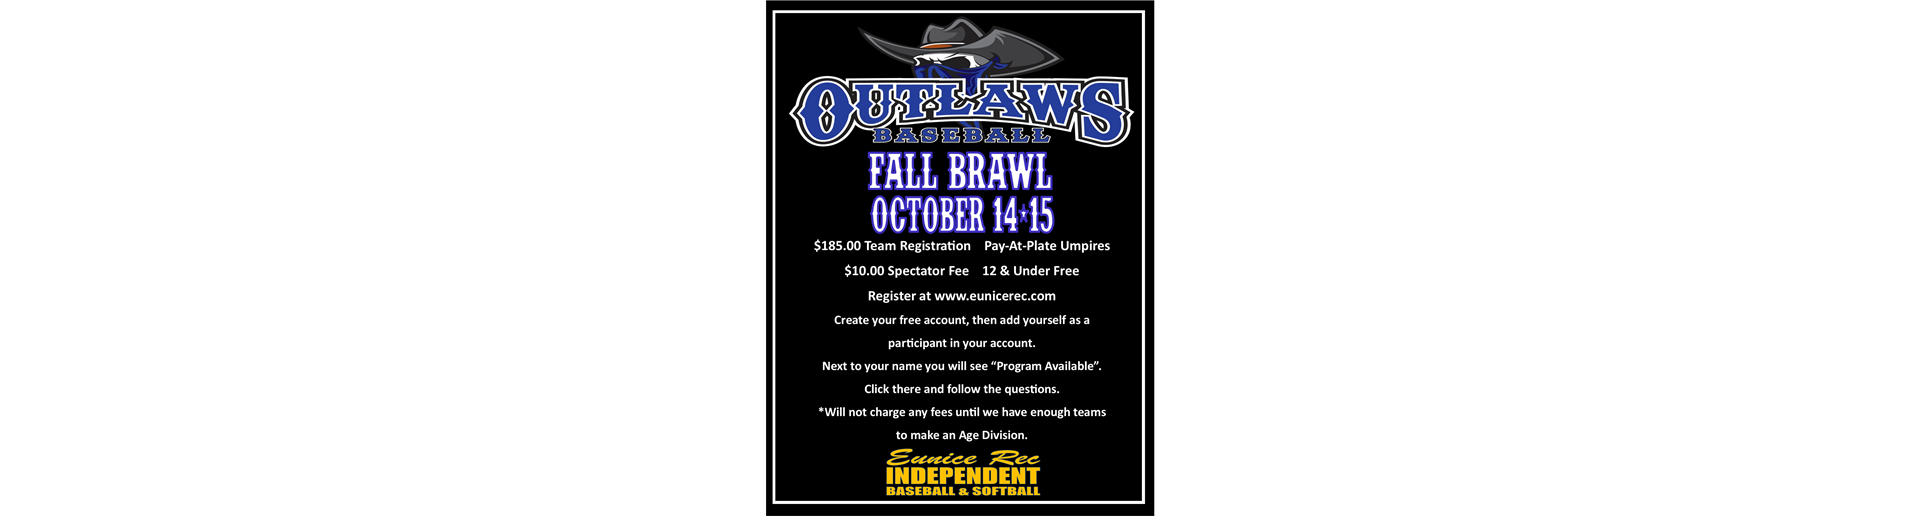 Outlaws Fall Brawl